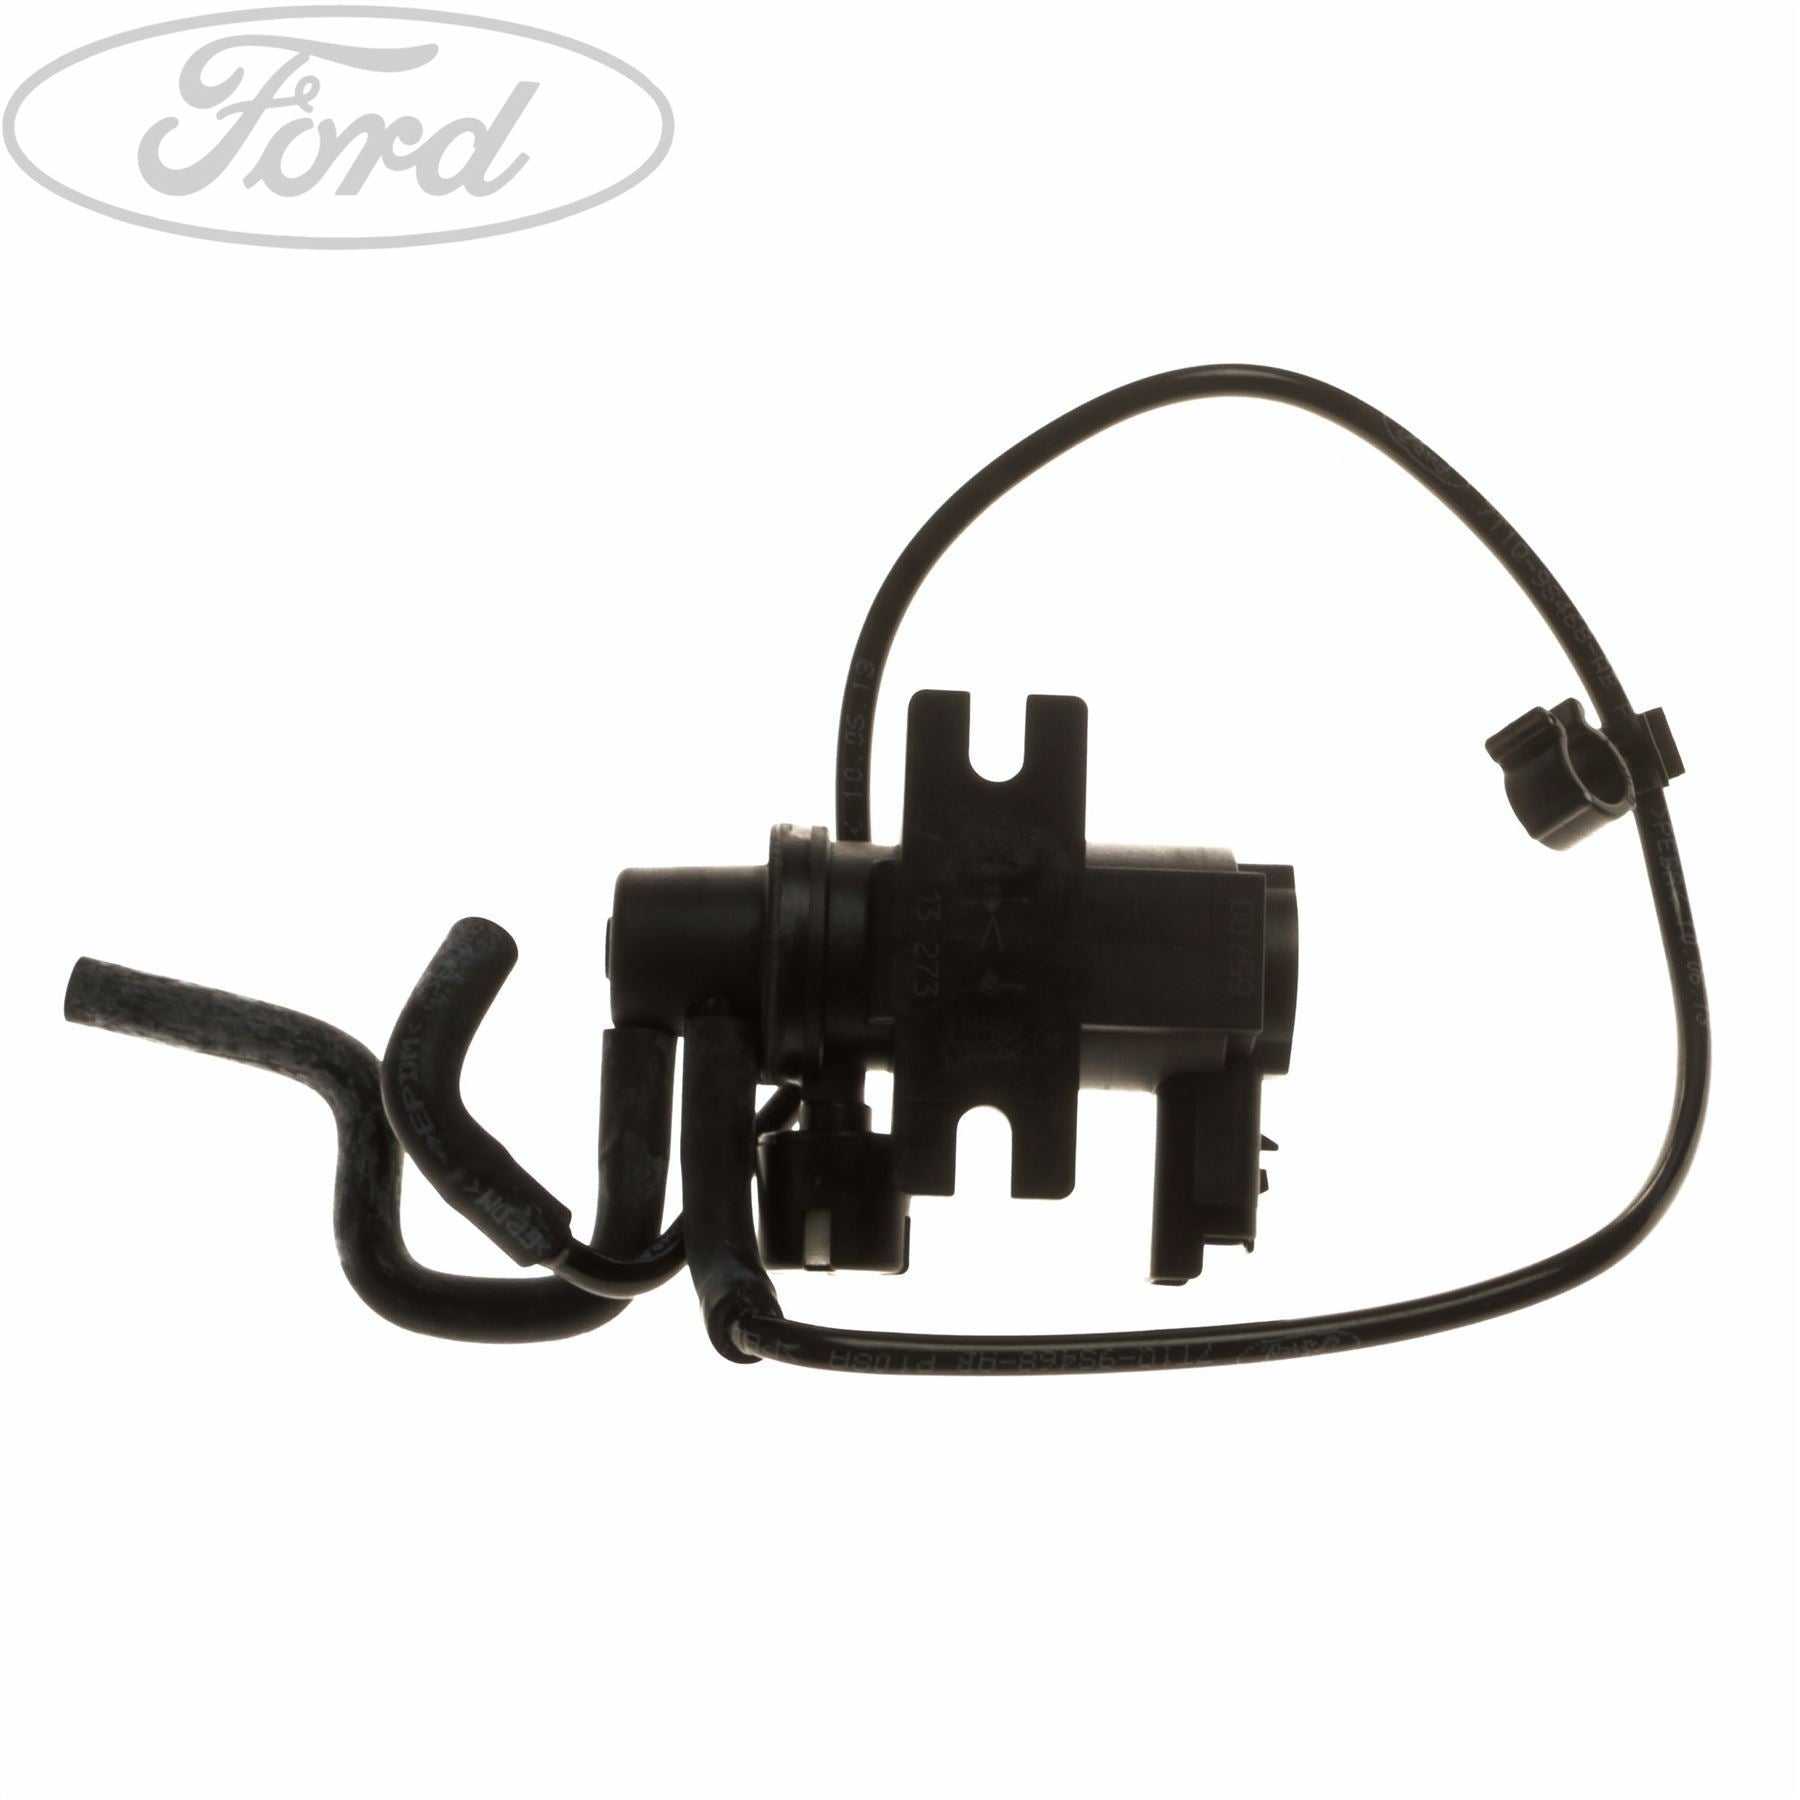 Ford, TANSIT CUSTOM 1.8TDCI CRANKCASE OIL SEPARATOR HOSE 06-2013